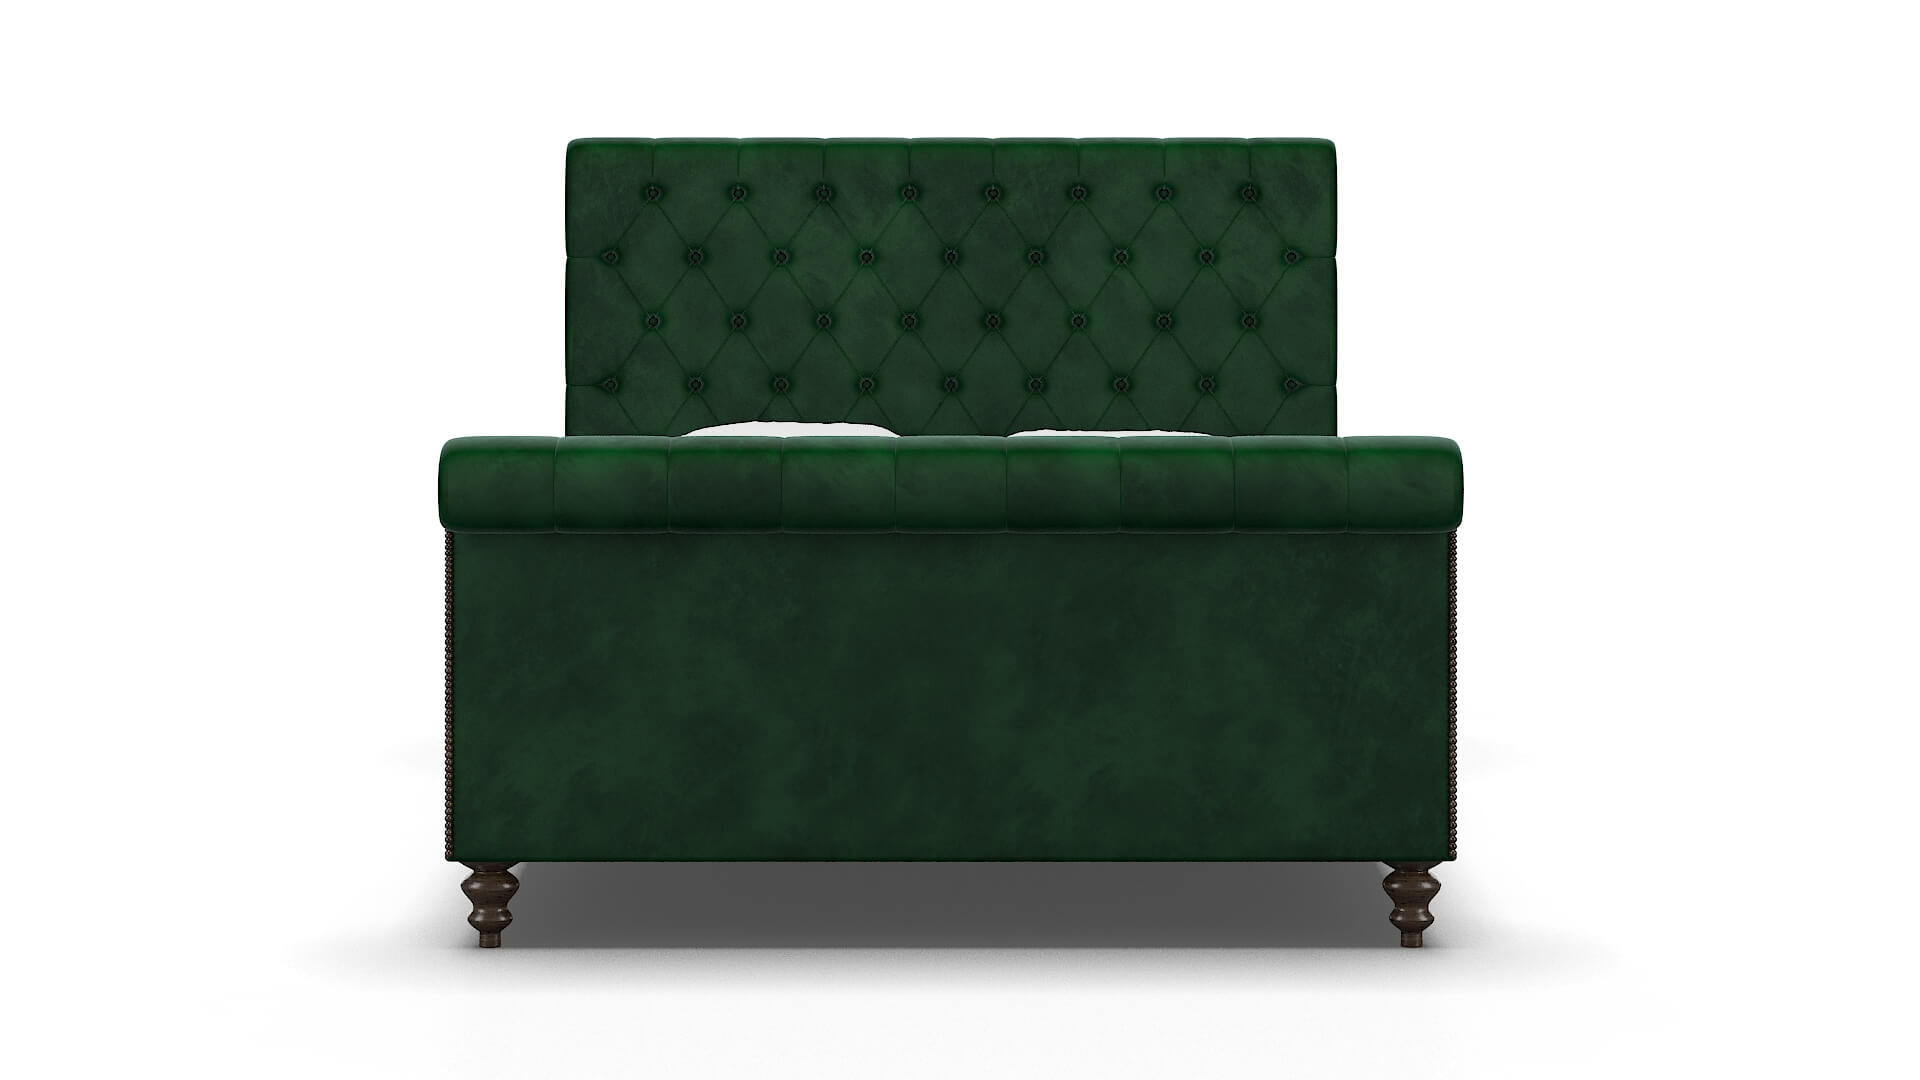 Kaila Royale Evergreen chair espresso legs